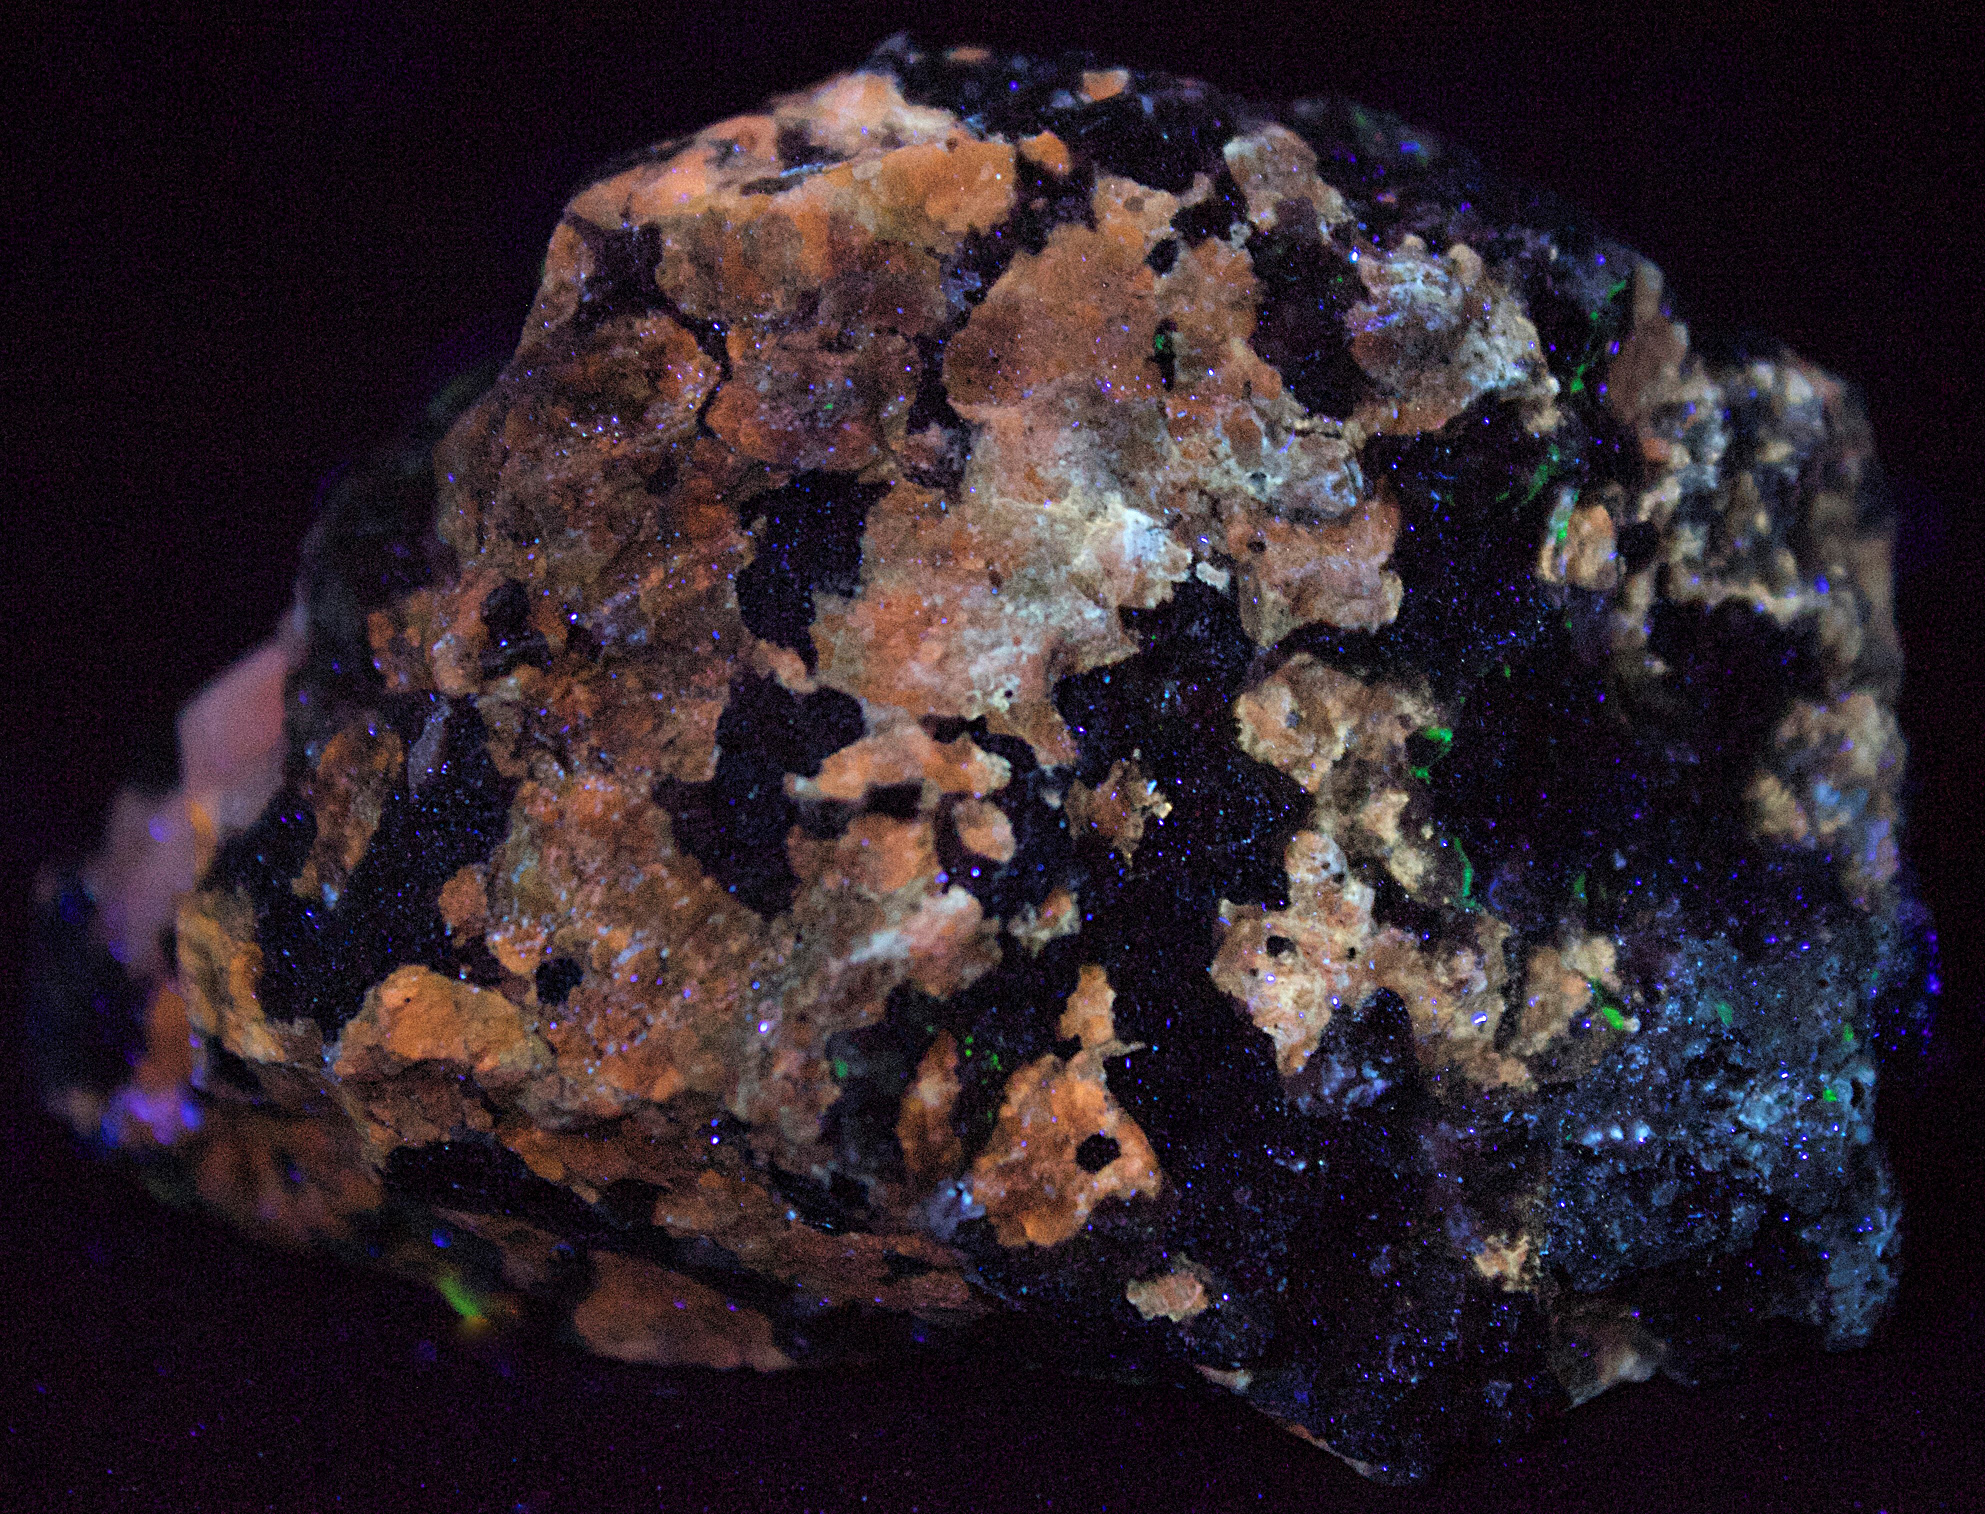 Cuspidine, calcite, willemite, and franklinite from Franklin, NJ under longwave UV Light